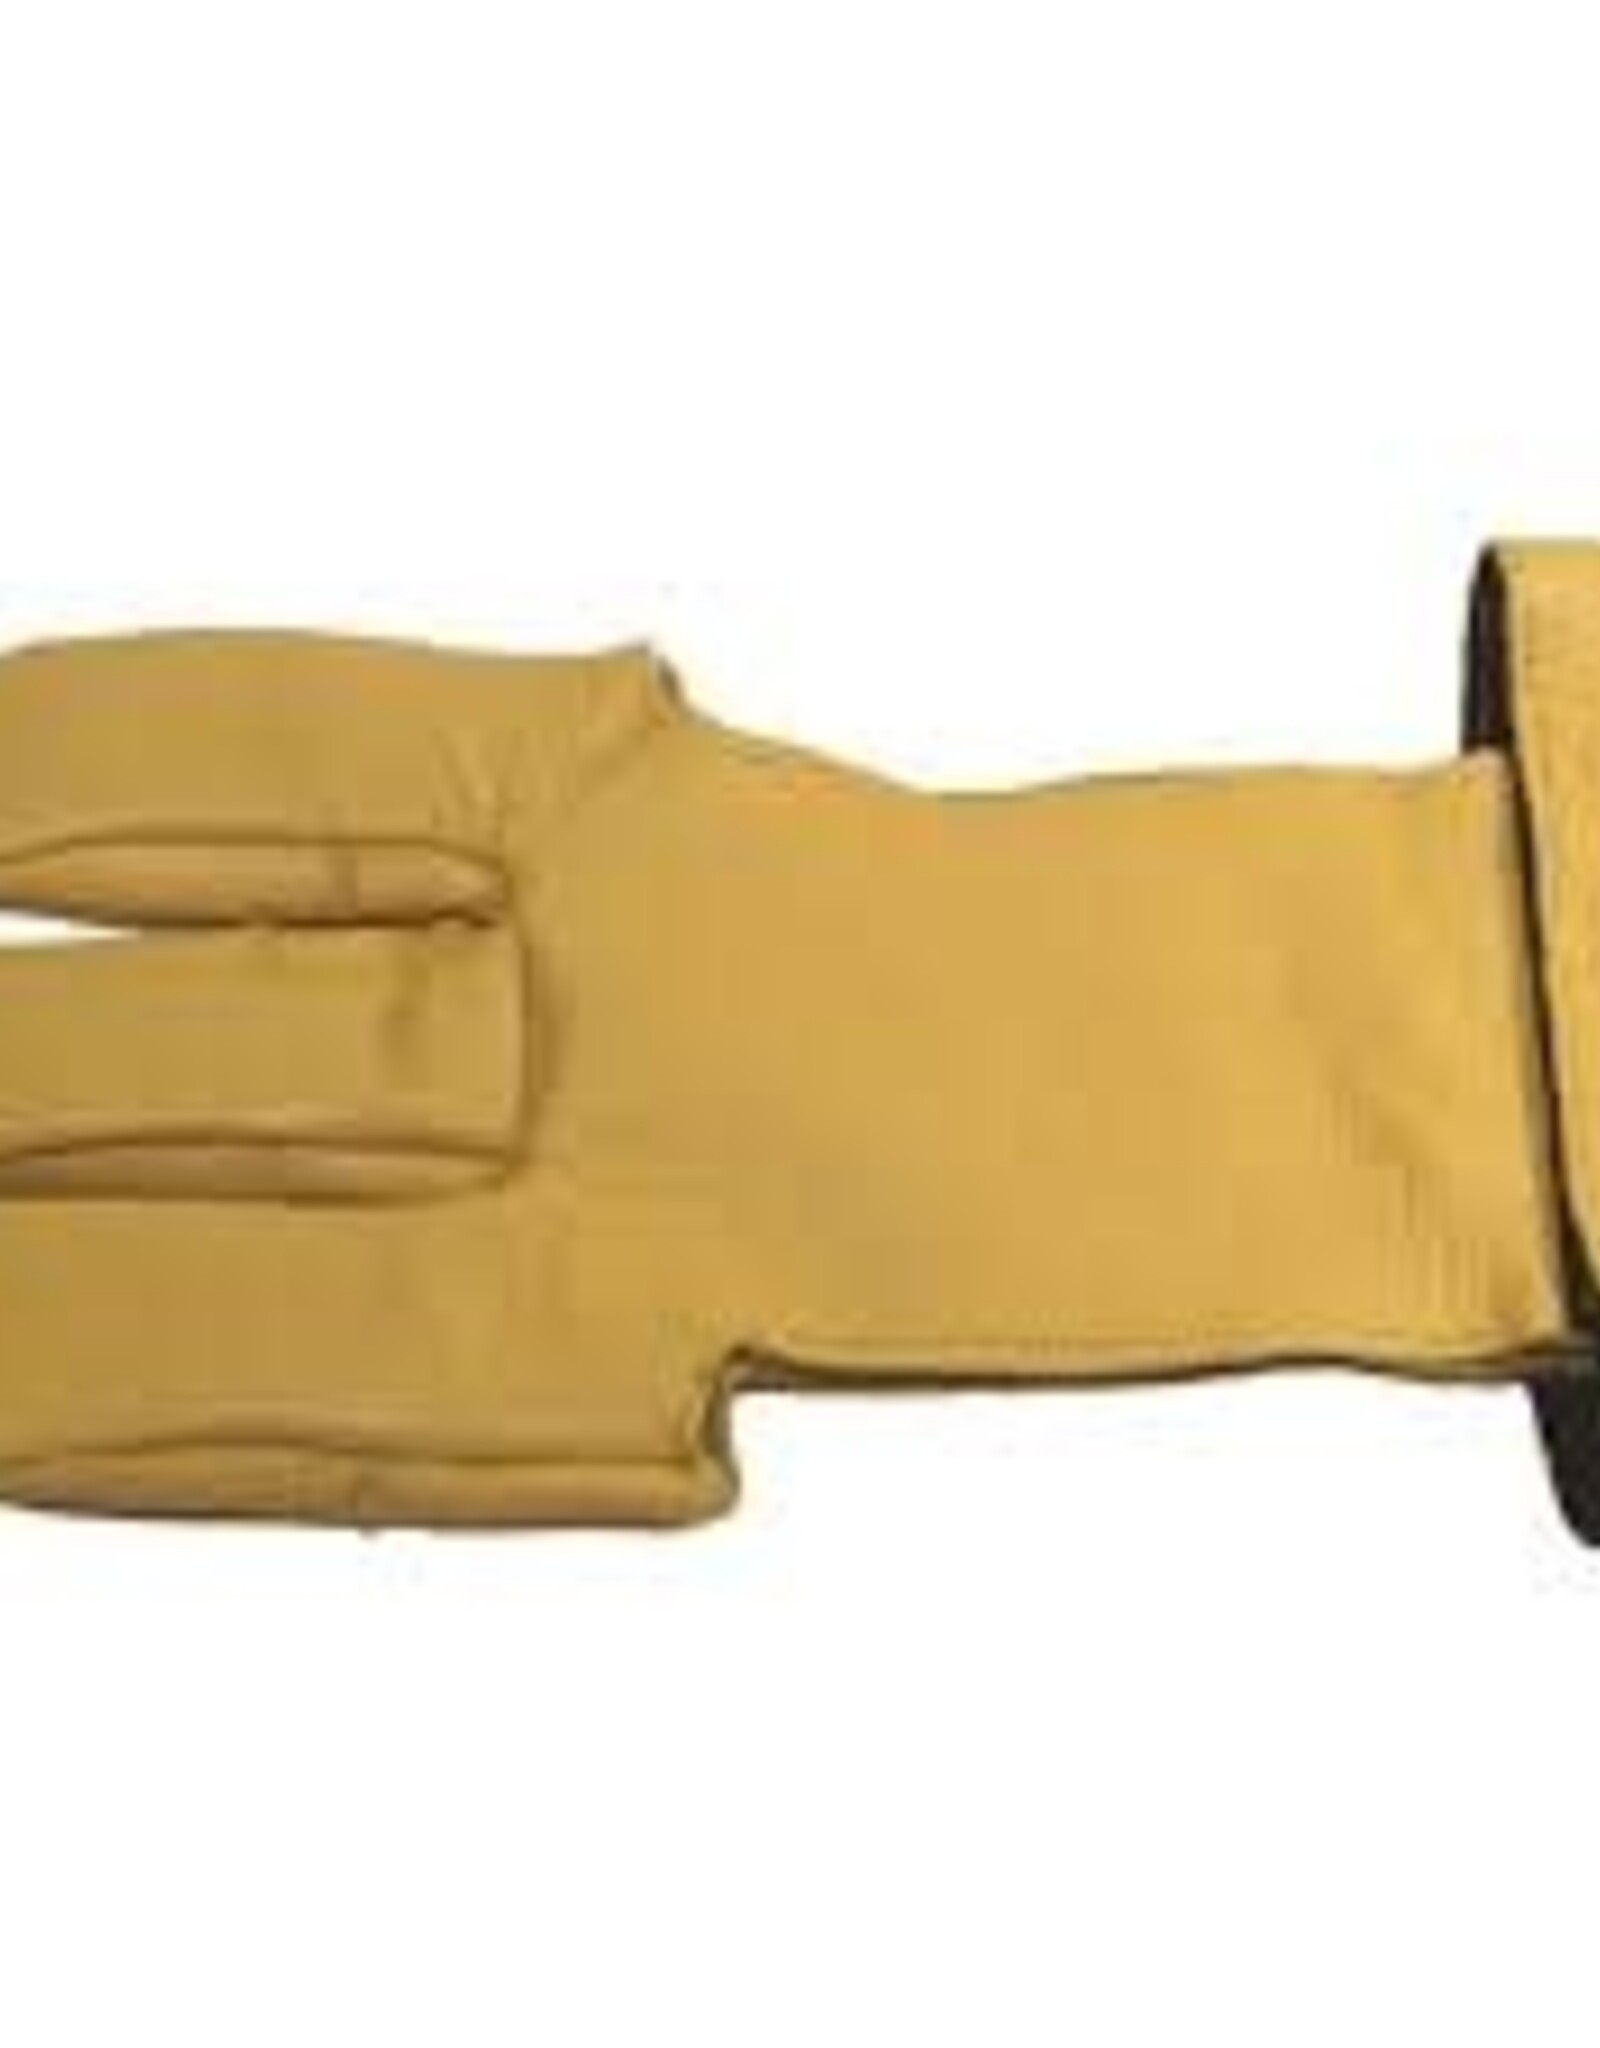 GAA Genuine Leather Shooting Glove